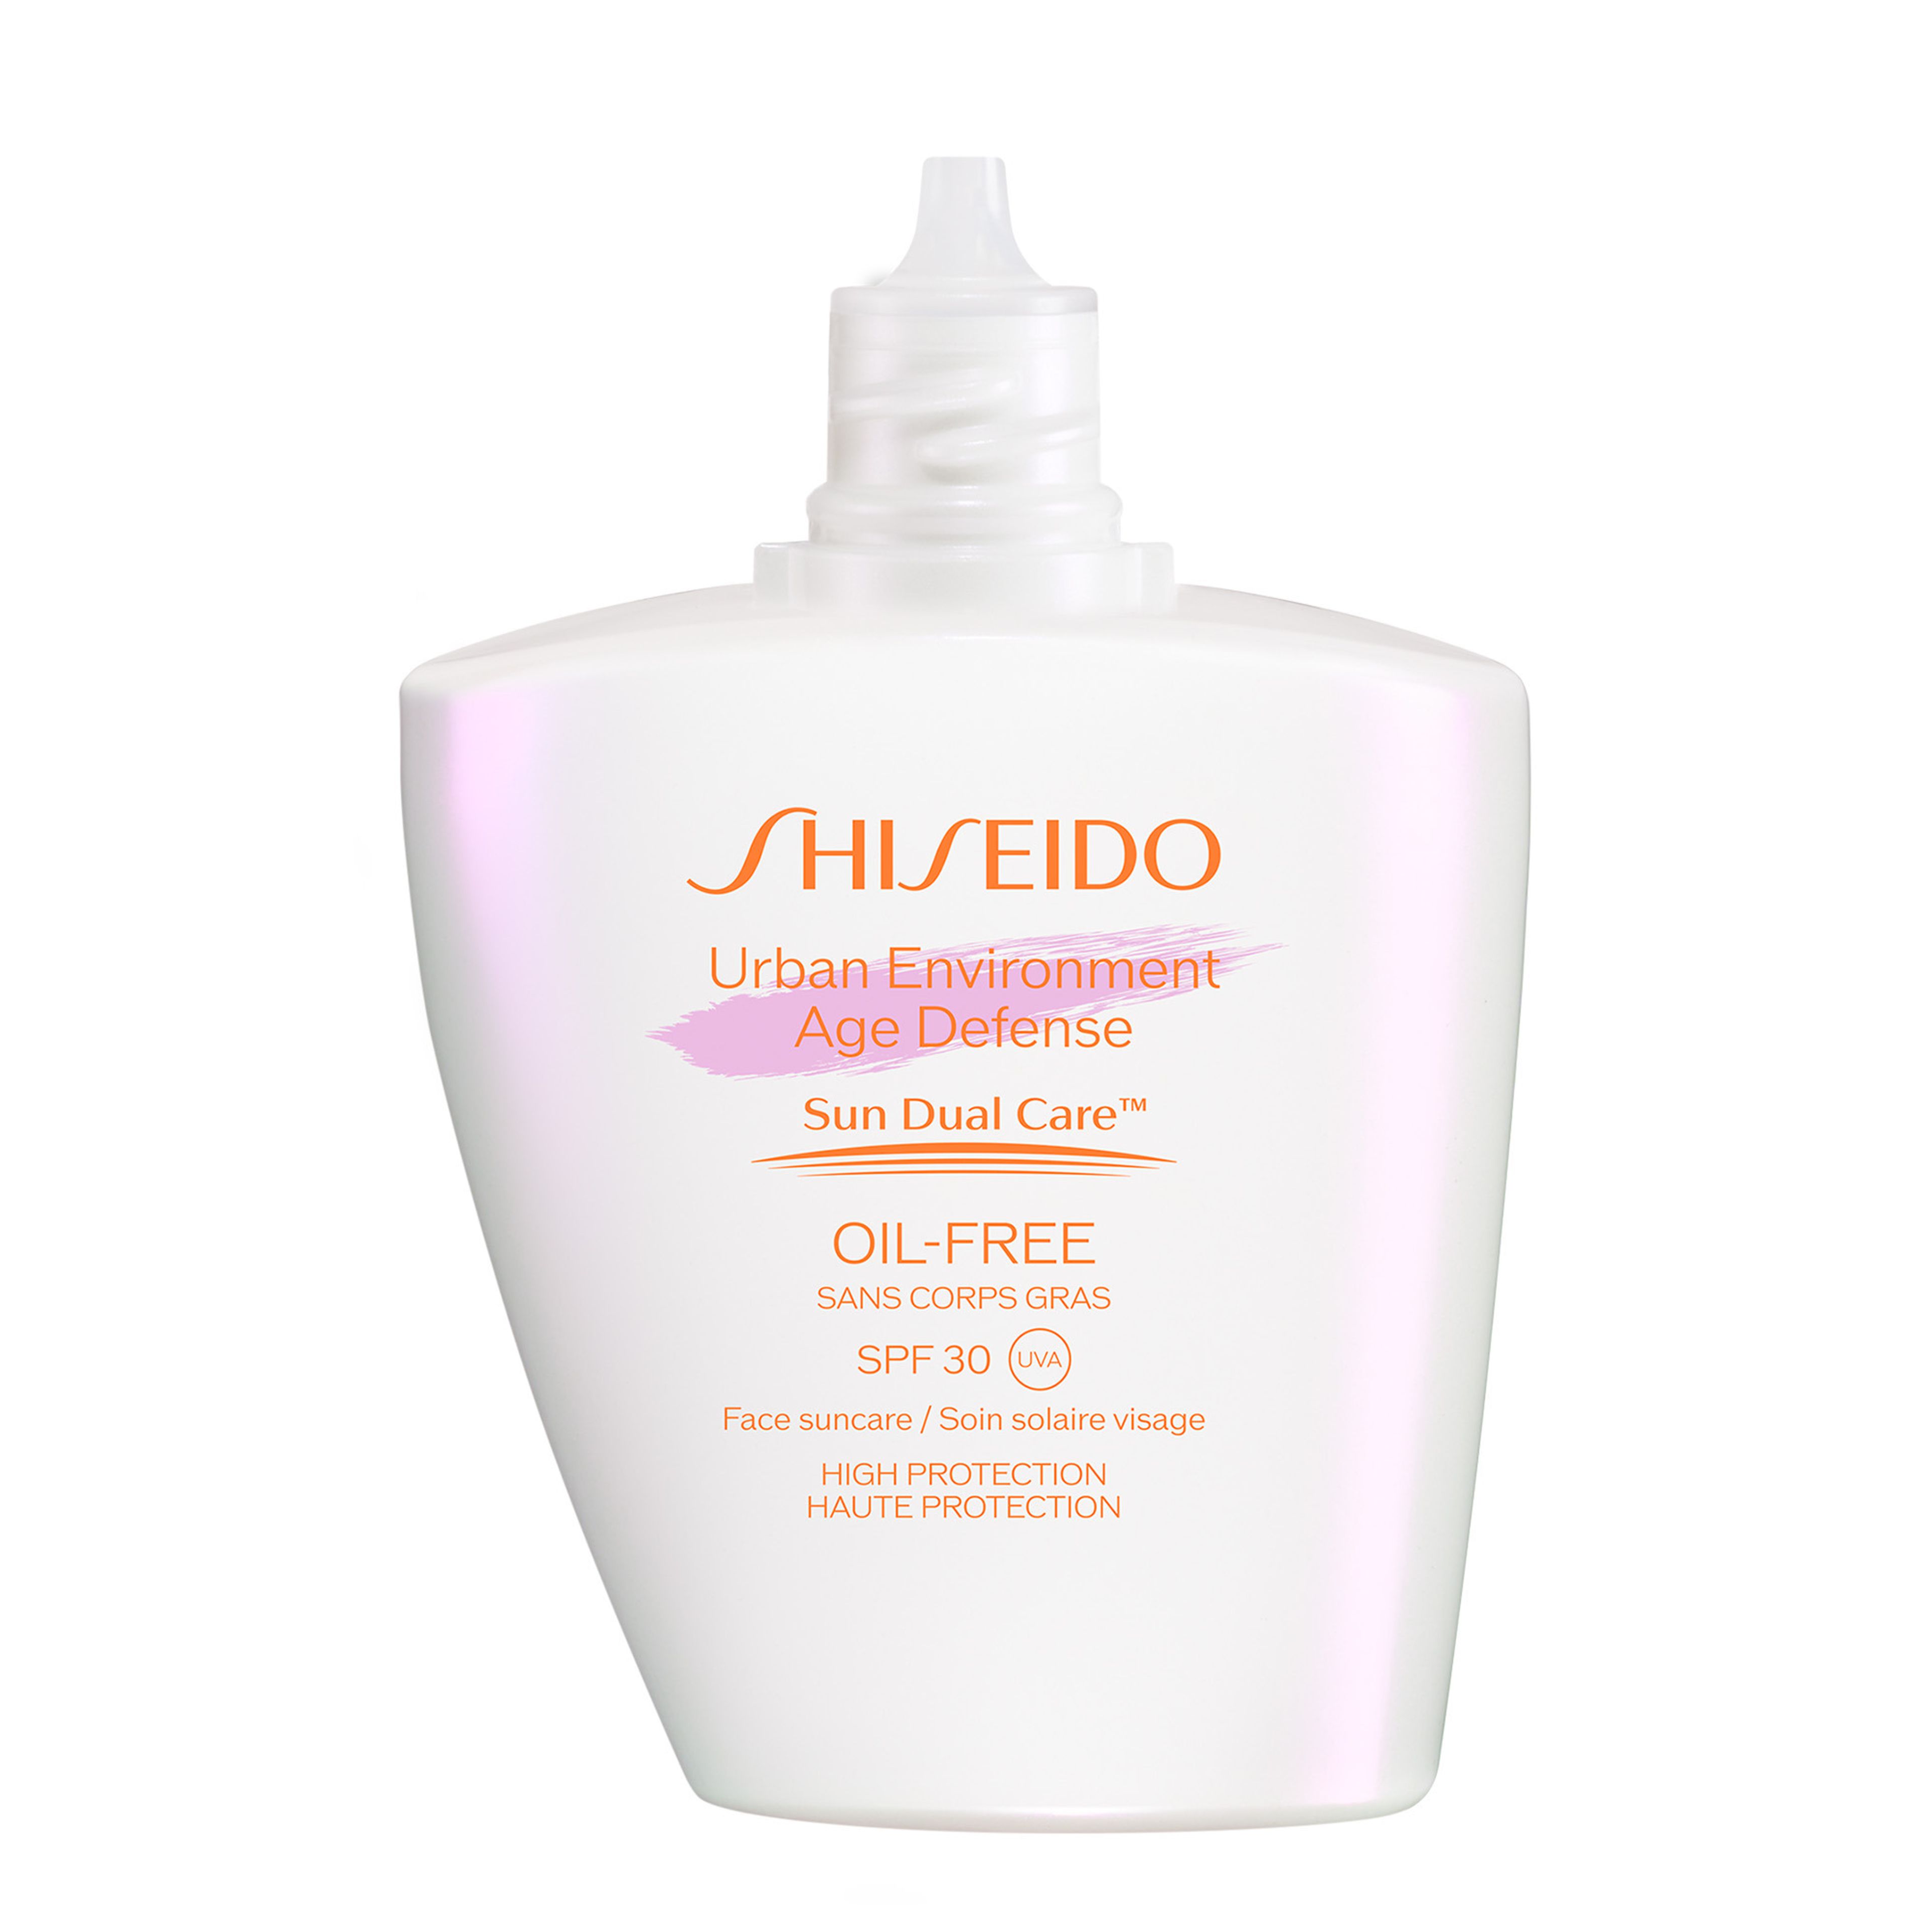 Shiseido Urban Environment Age Defense Oil-free Spf 30 2